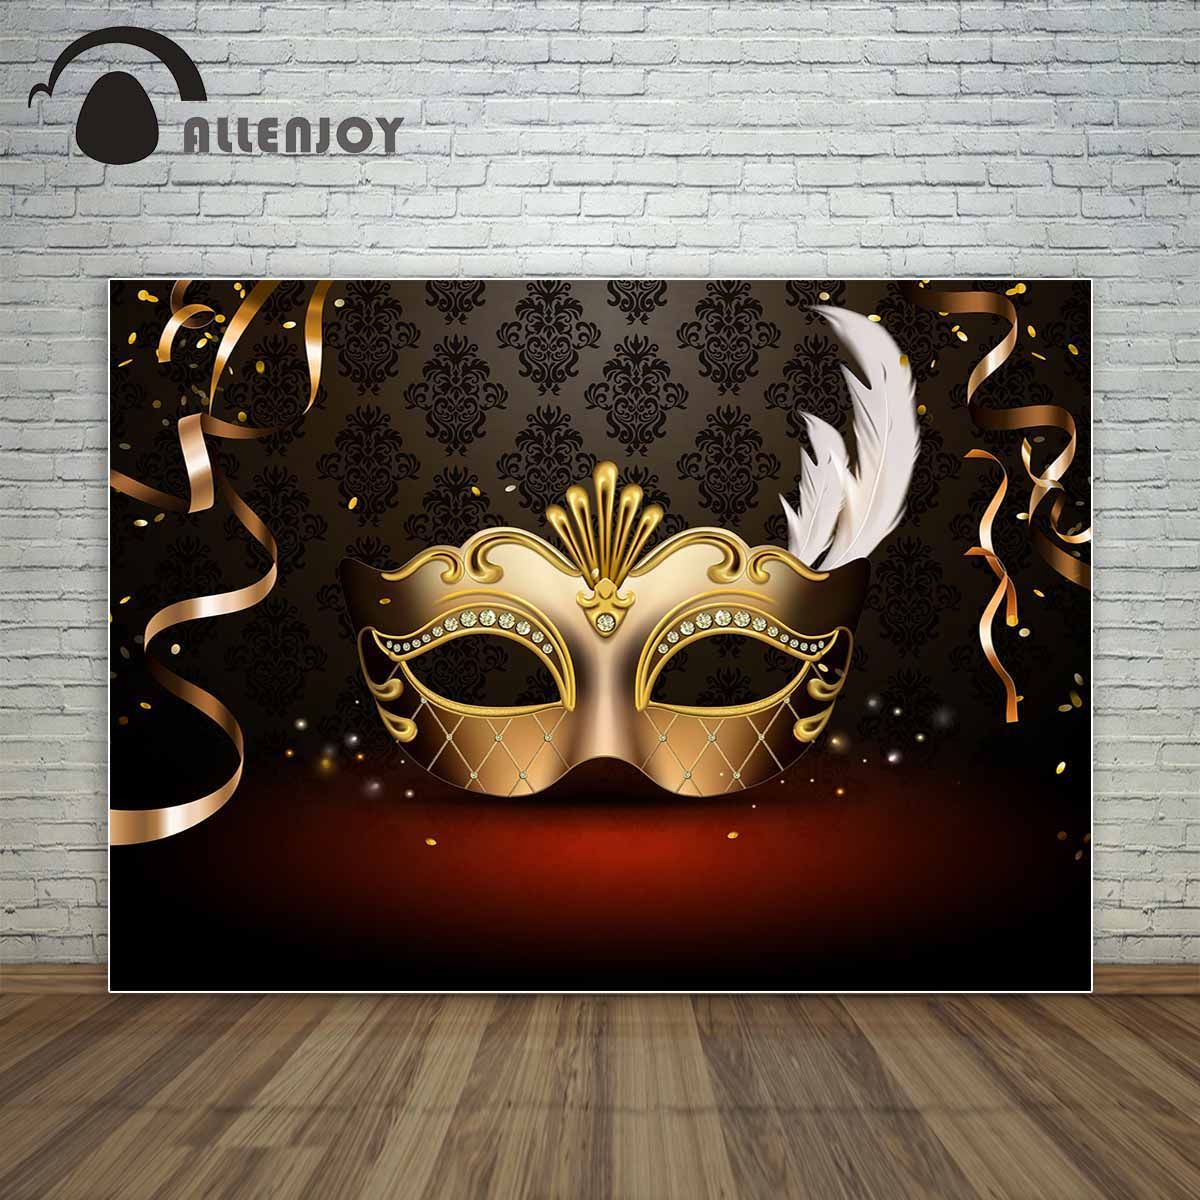 Allenjoy Masquerade Party Beautiful Mask On Damask Background